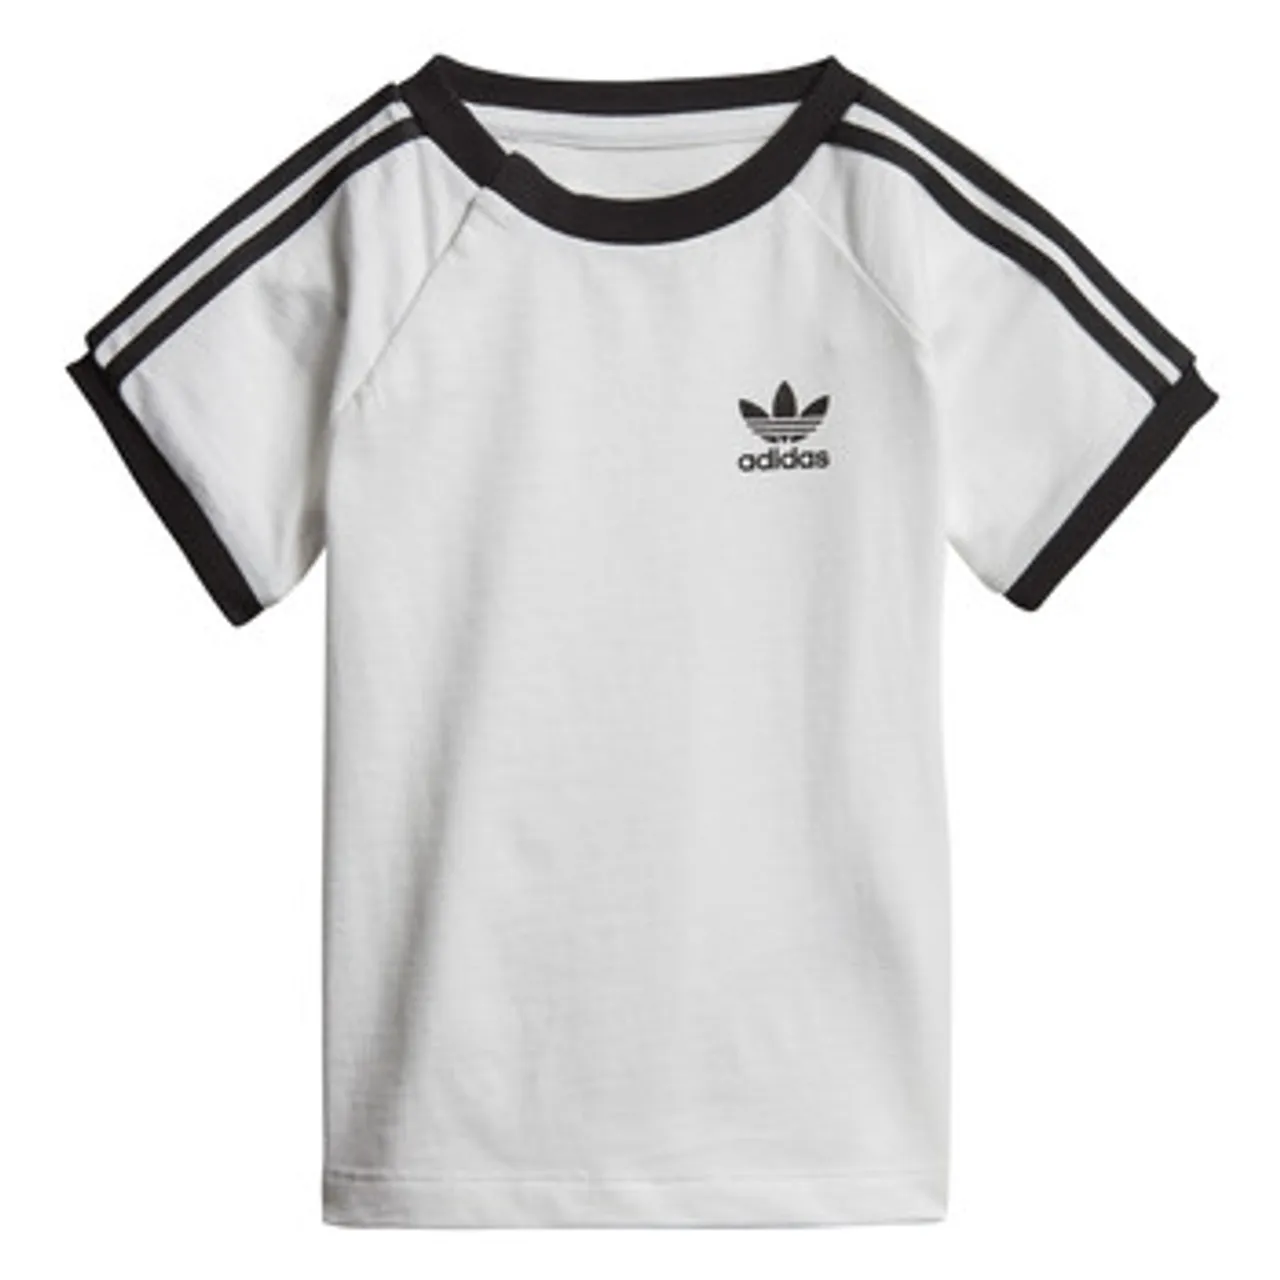 adidas  DV2824  boys's Children's T shirt in White